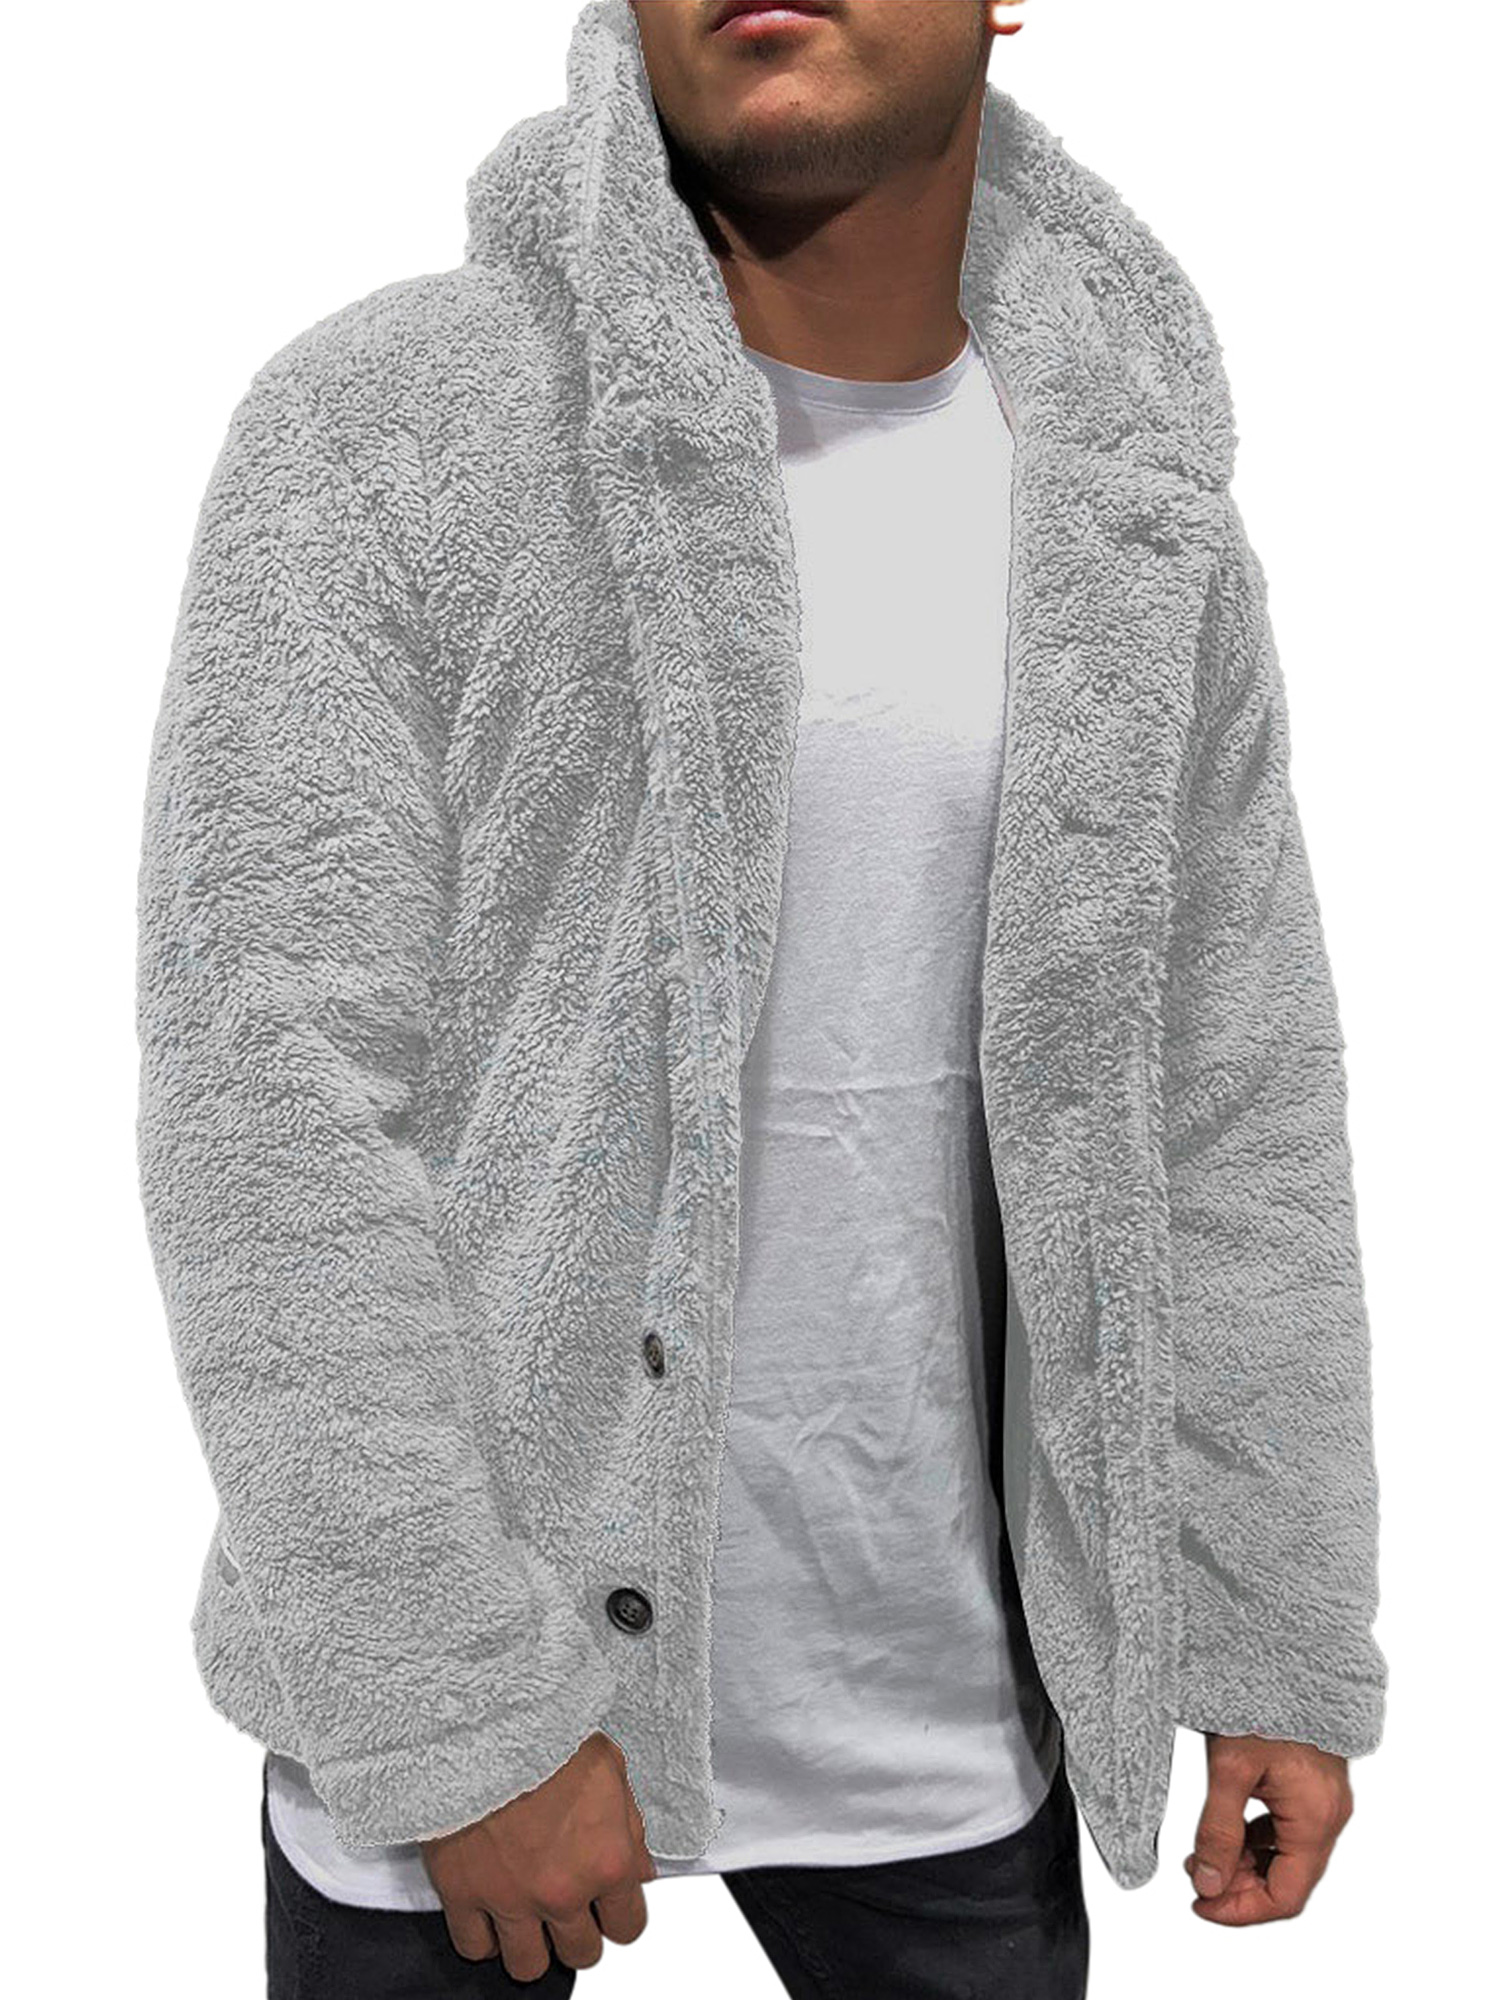 MAWCLOS Sherpa Fuzzy Fleece Hoodie for Men Oversized Hooded Coats Jacket Sweater Tops Outwear Autumn Winter Button Down Cardigan - image 1 of 2